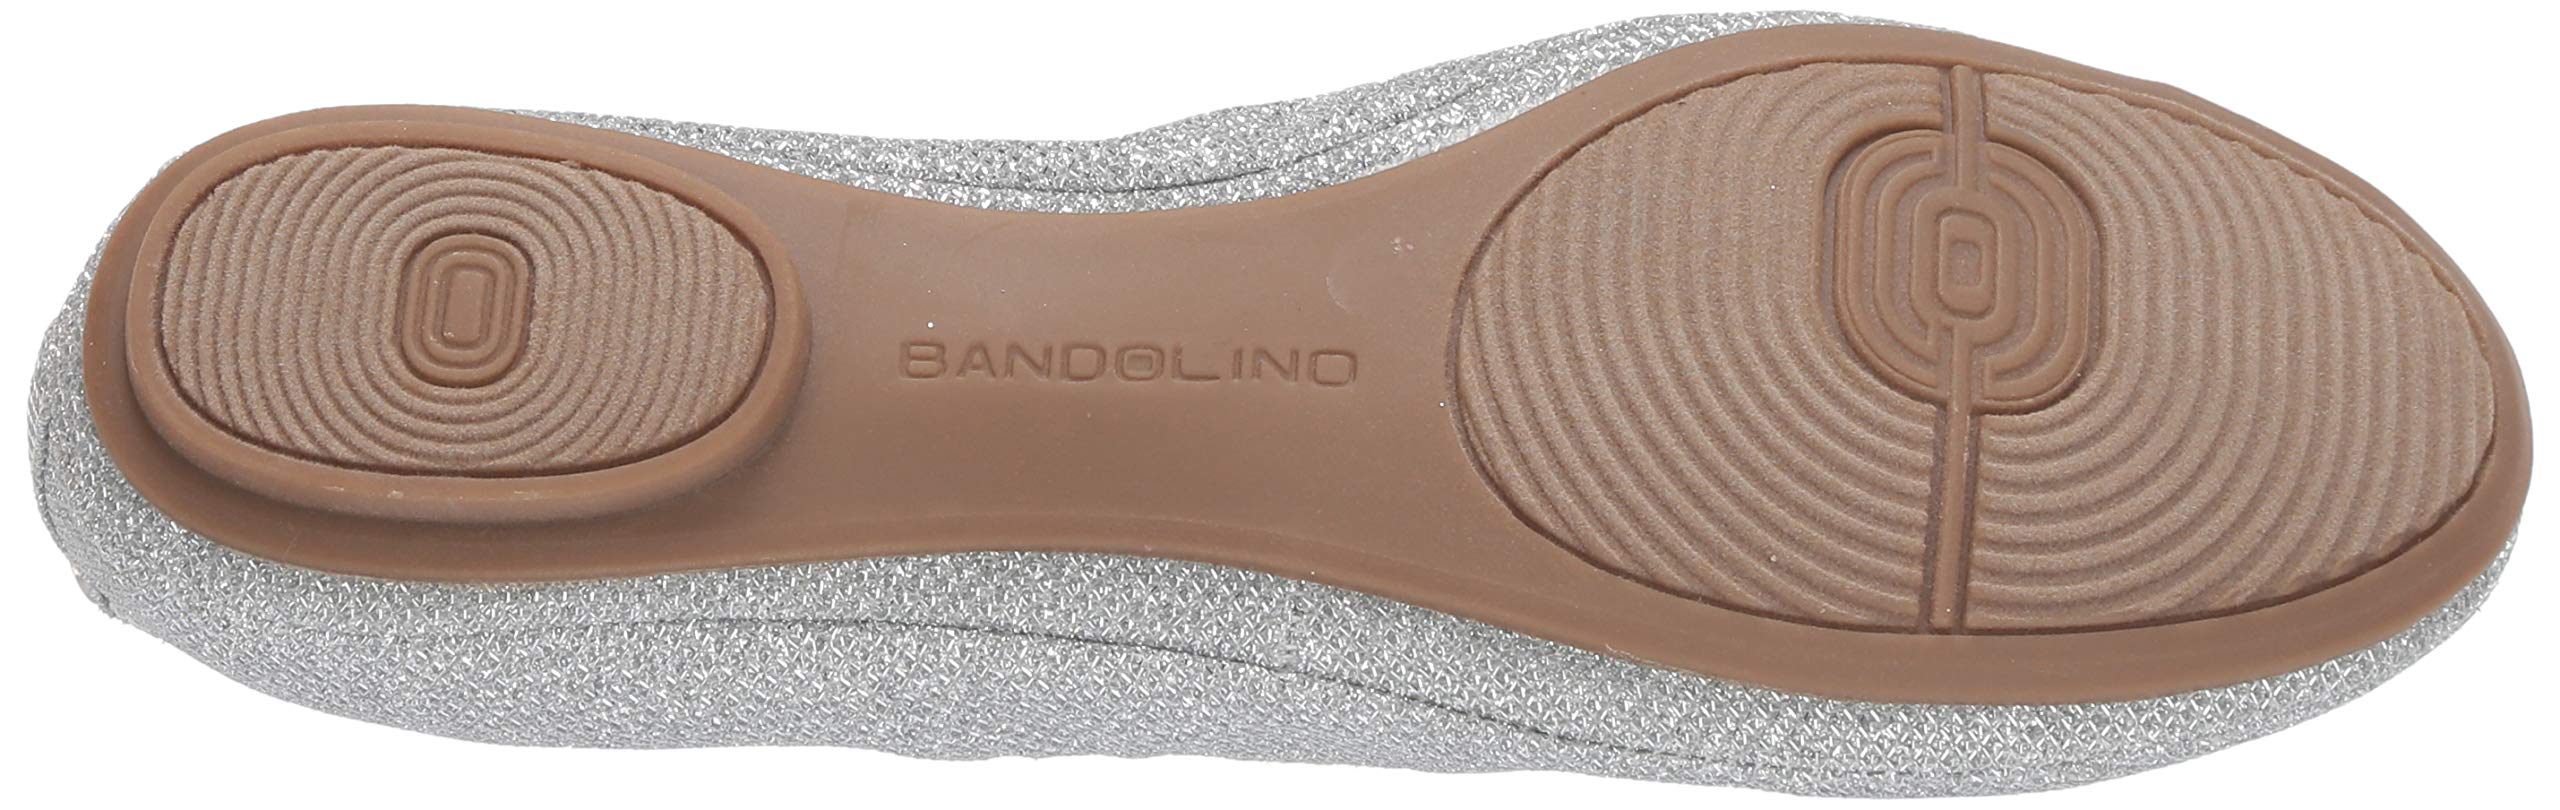 Bandolino Women's Edition Ballet Flat